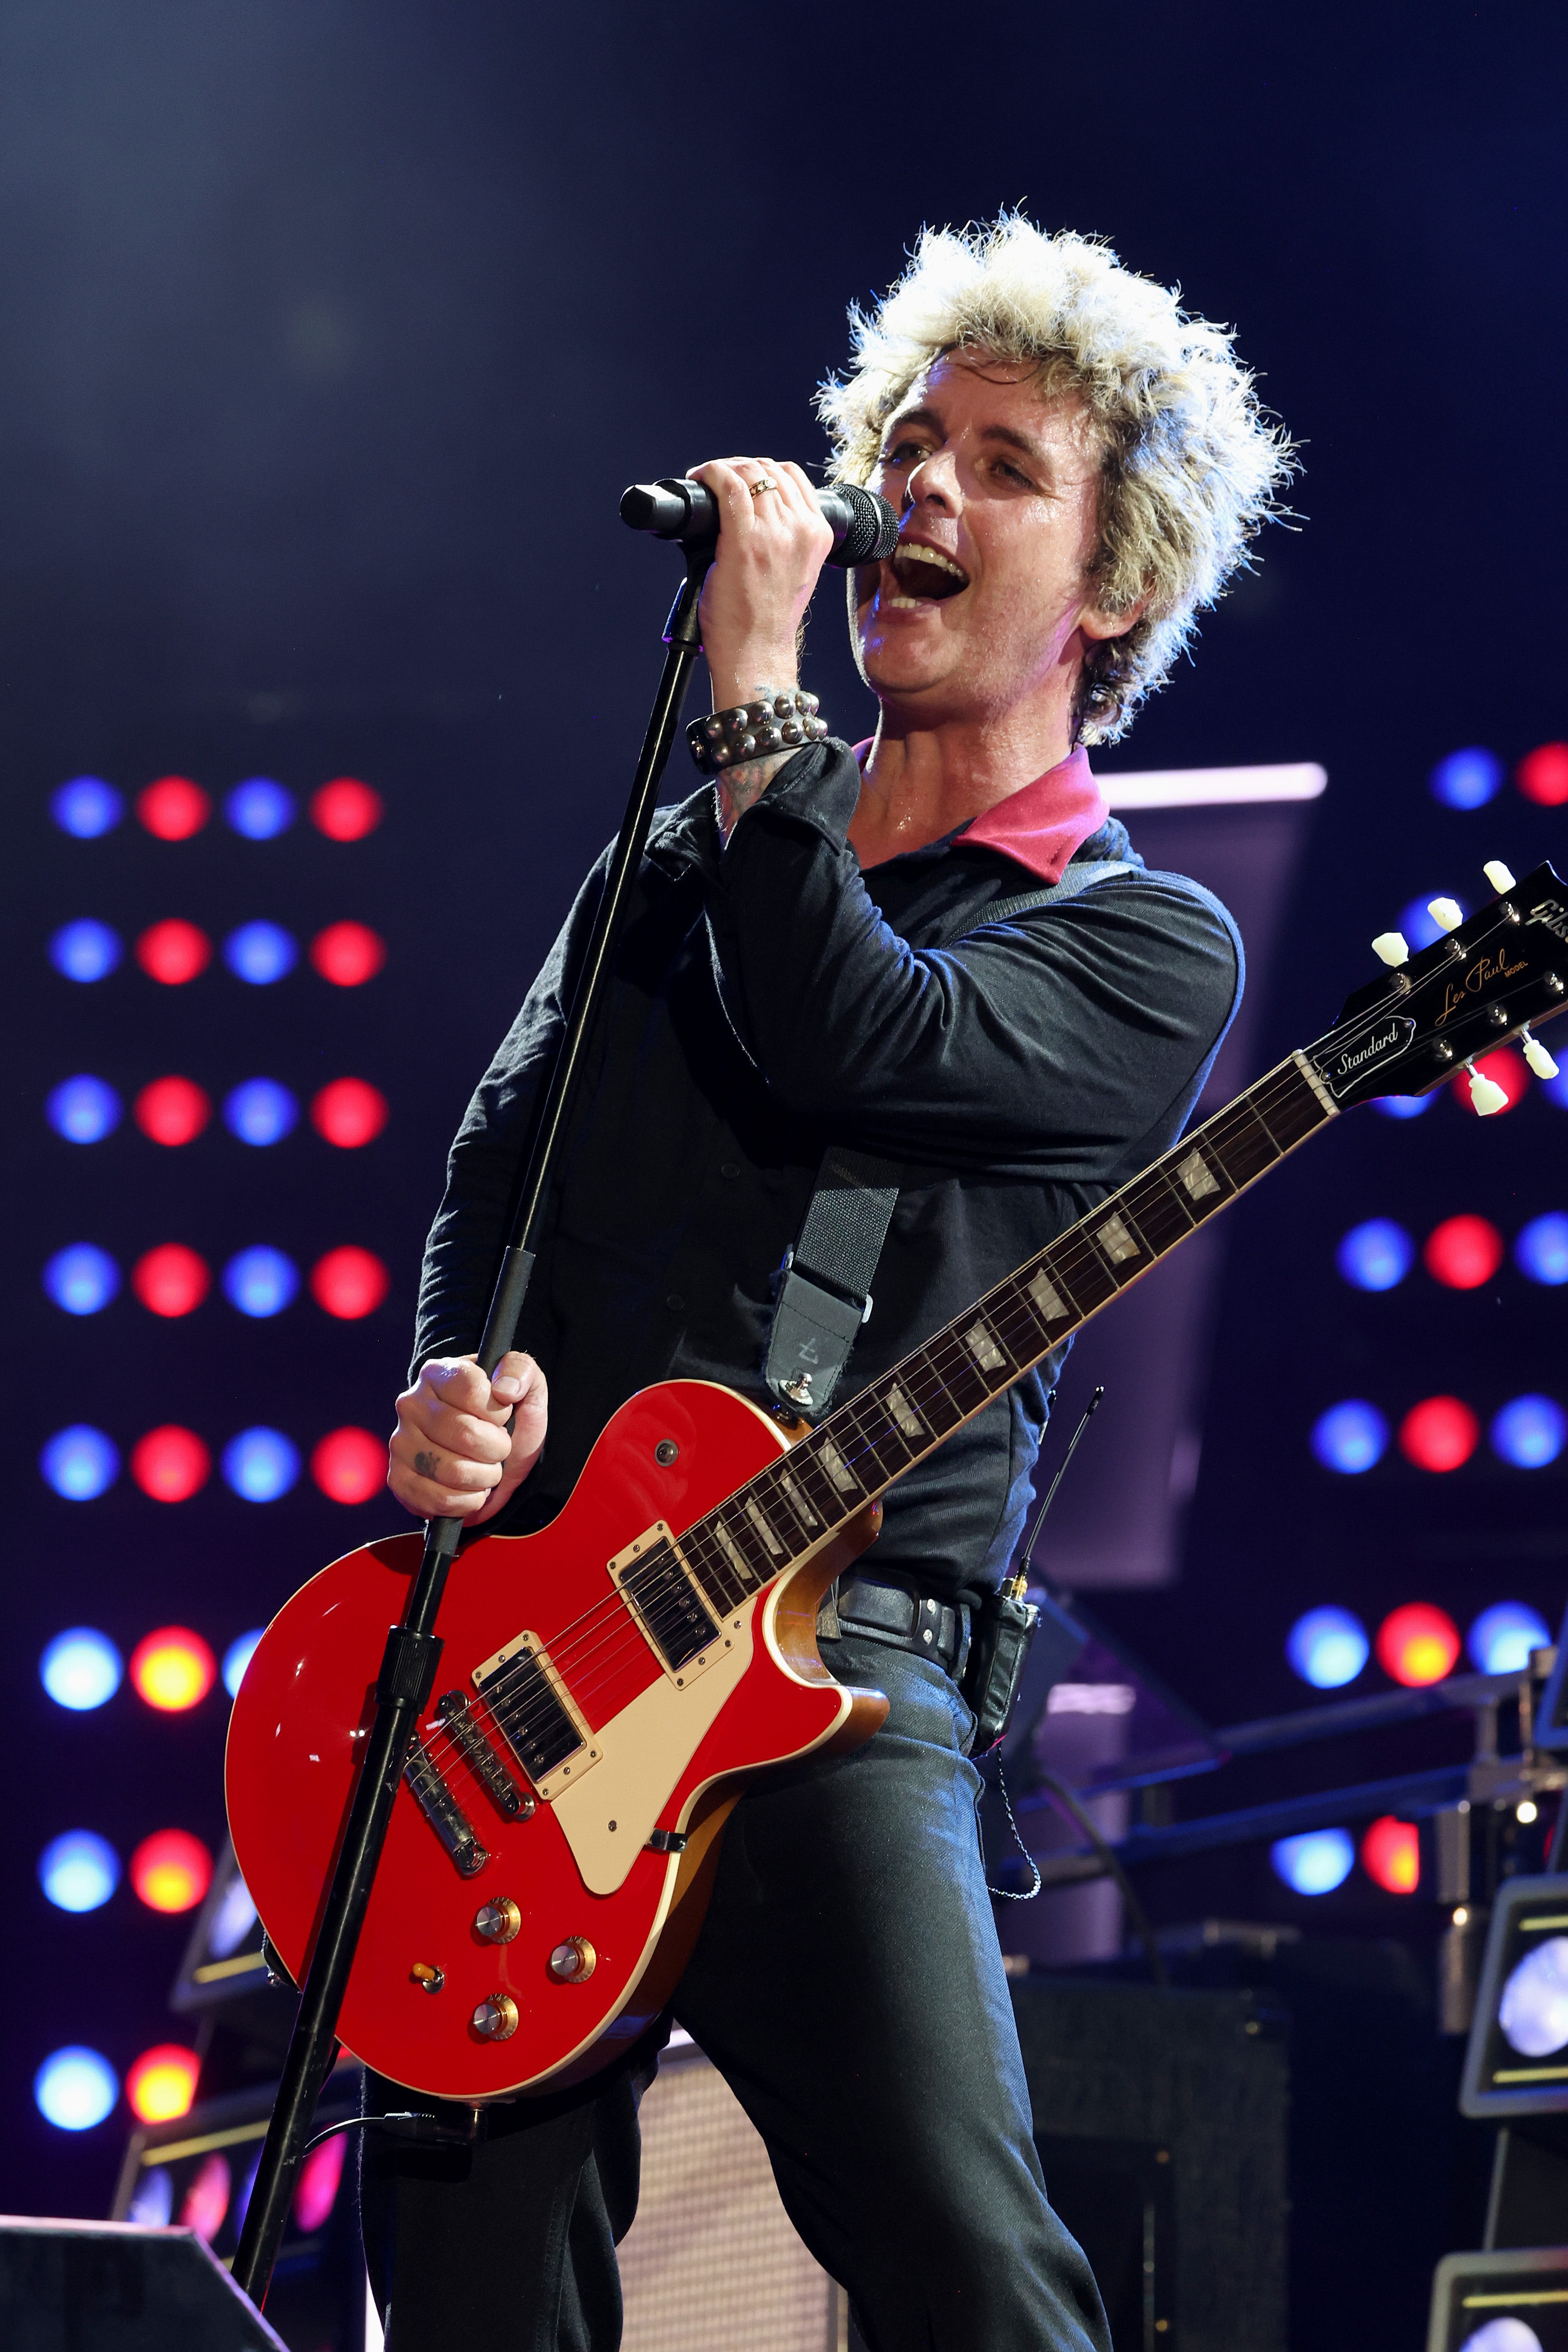 Green Day, Smashing Pumpkins roar through impressive sets after rain hits tour opener